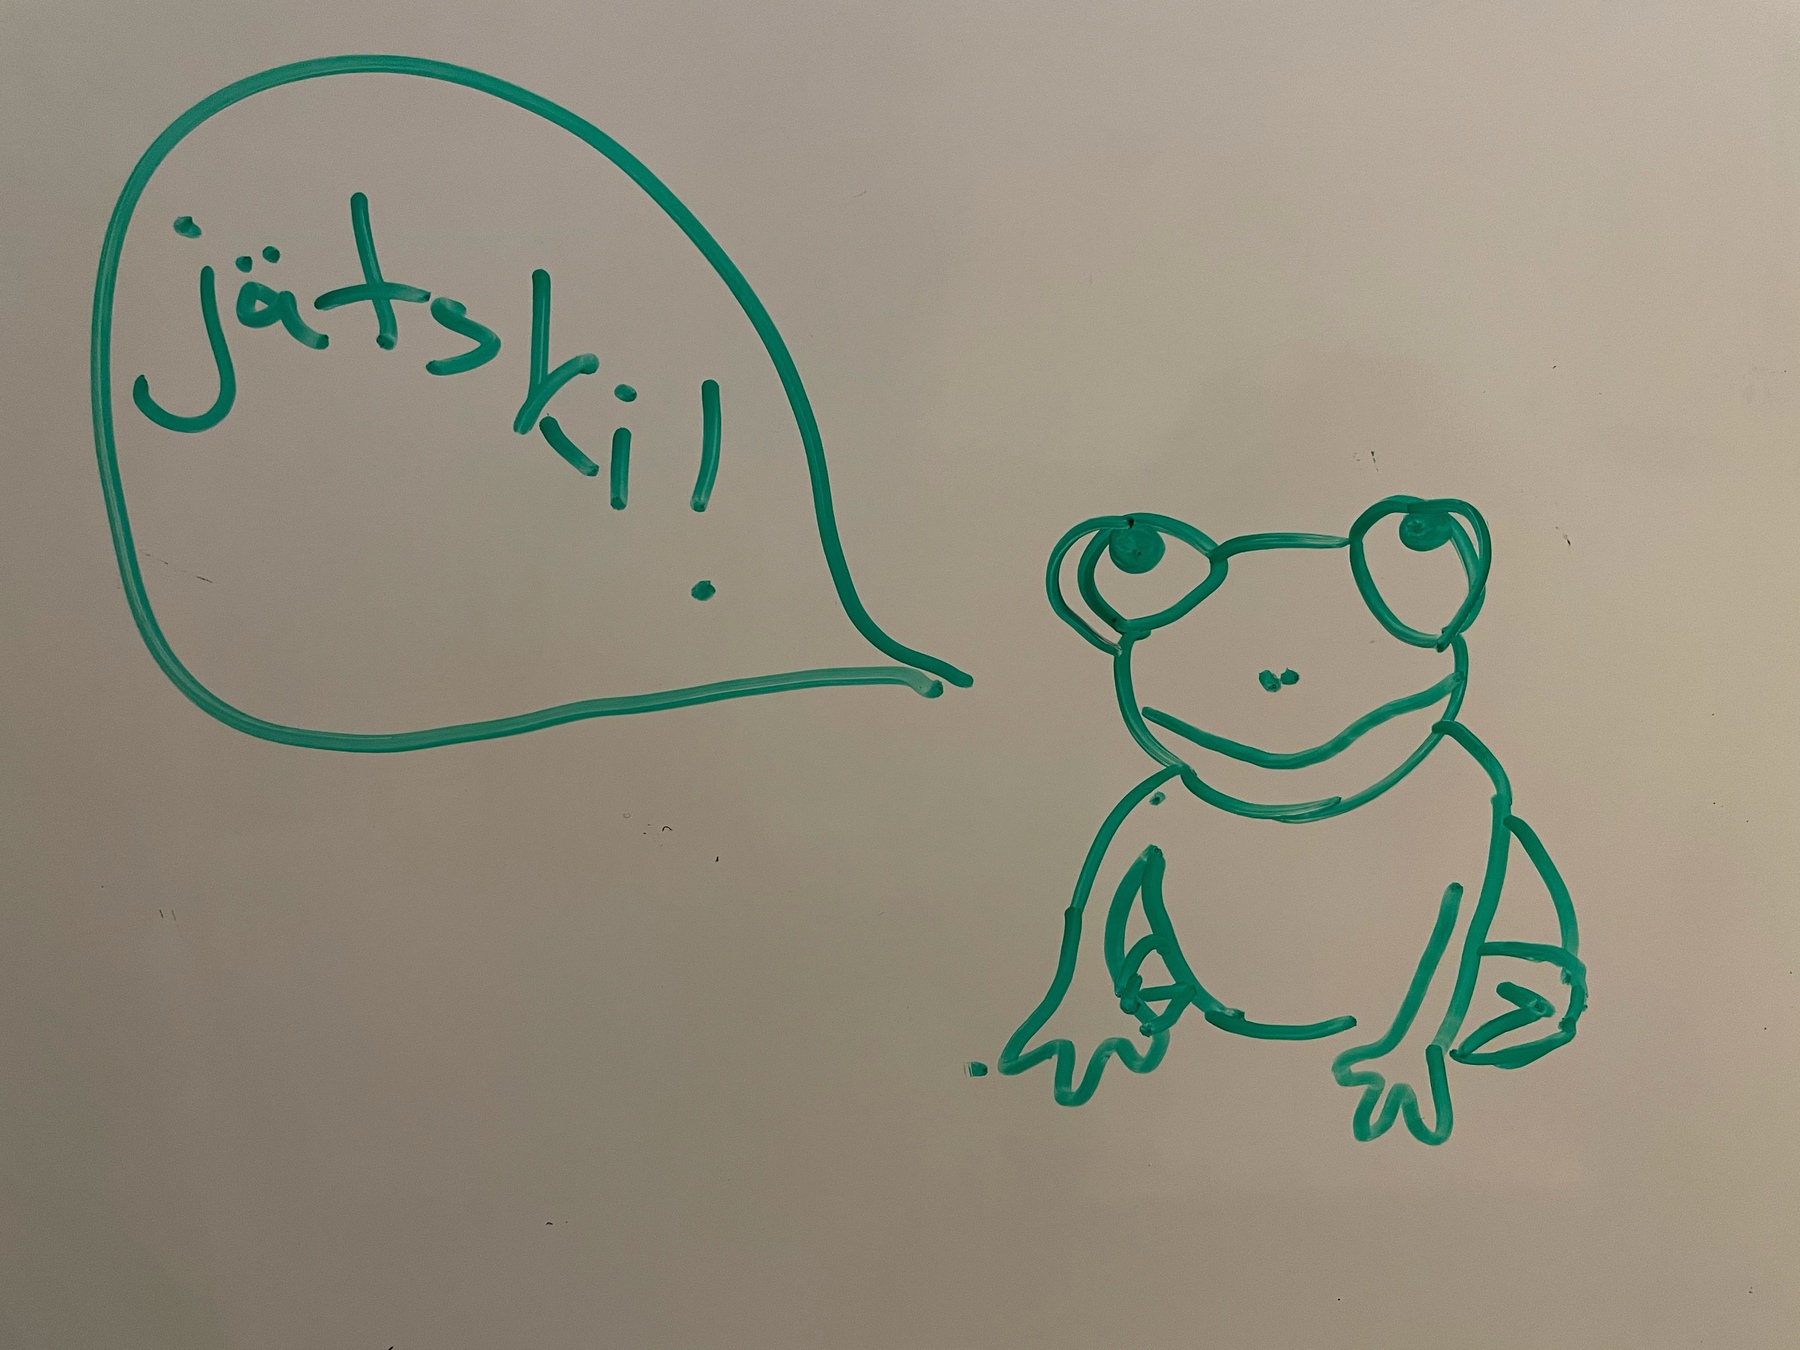 frog drawn on whiteboard, speech bubble saying "jätski" i.e. ice cream